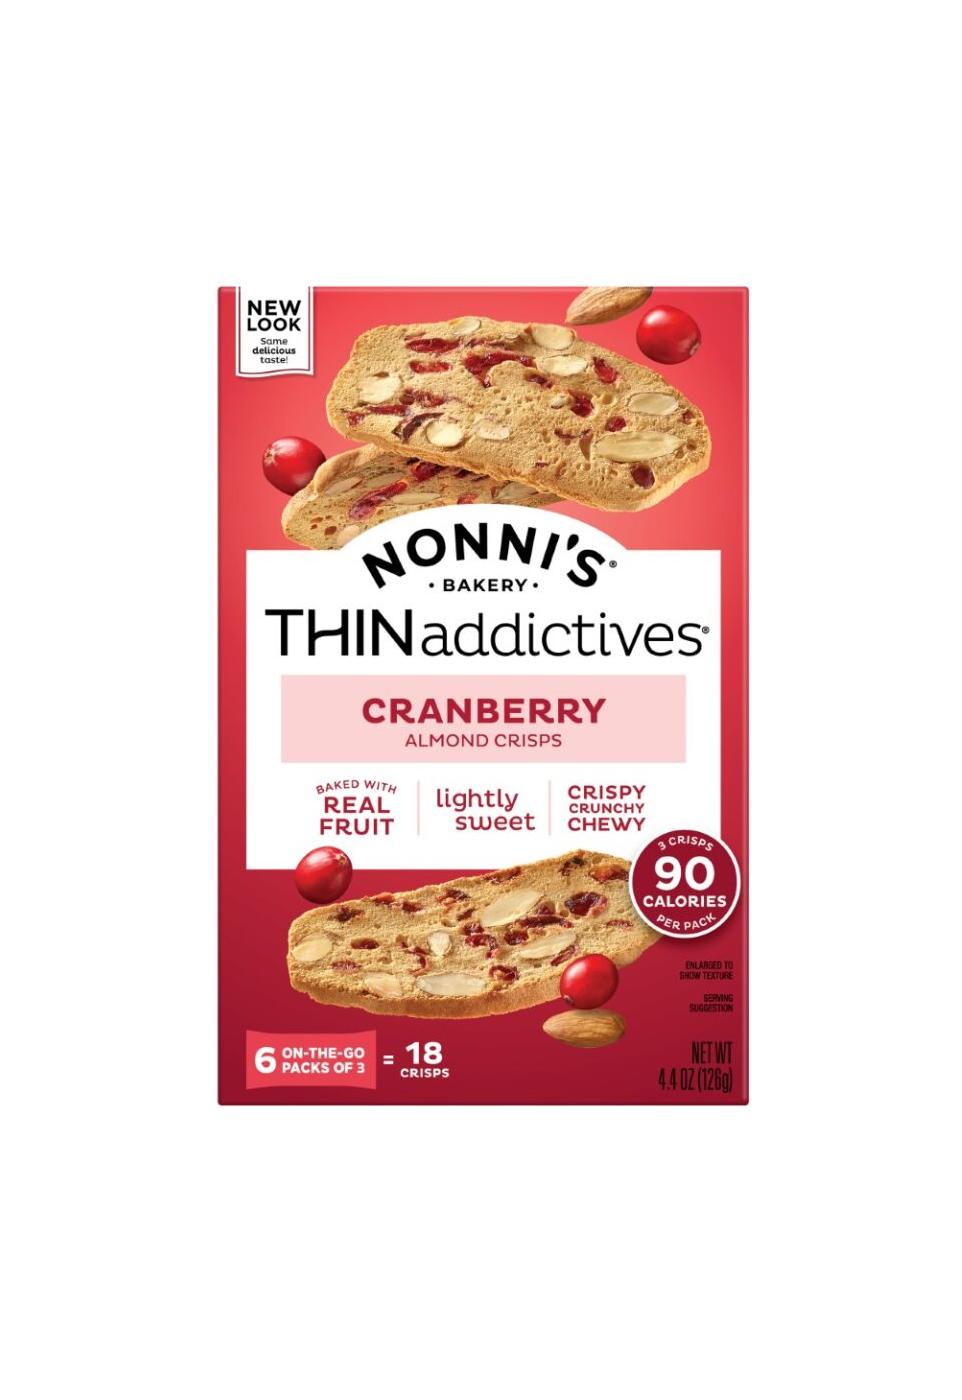 Nonni's Thin Addictives Cranberry Almond Crips; image 1 of 3